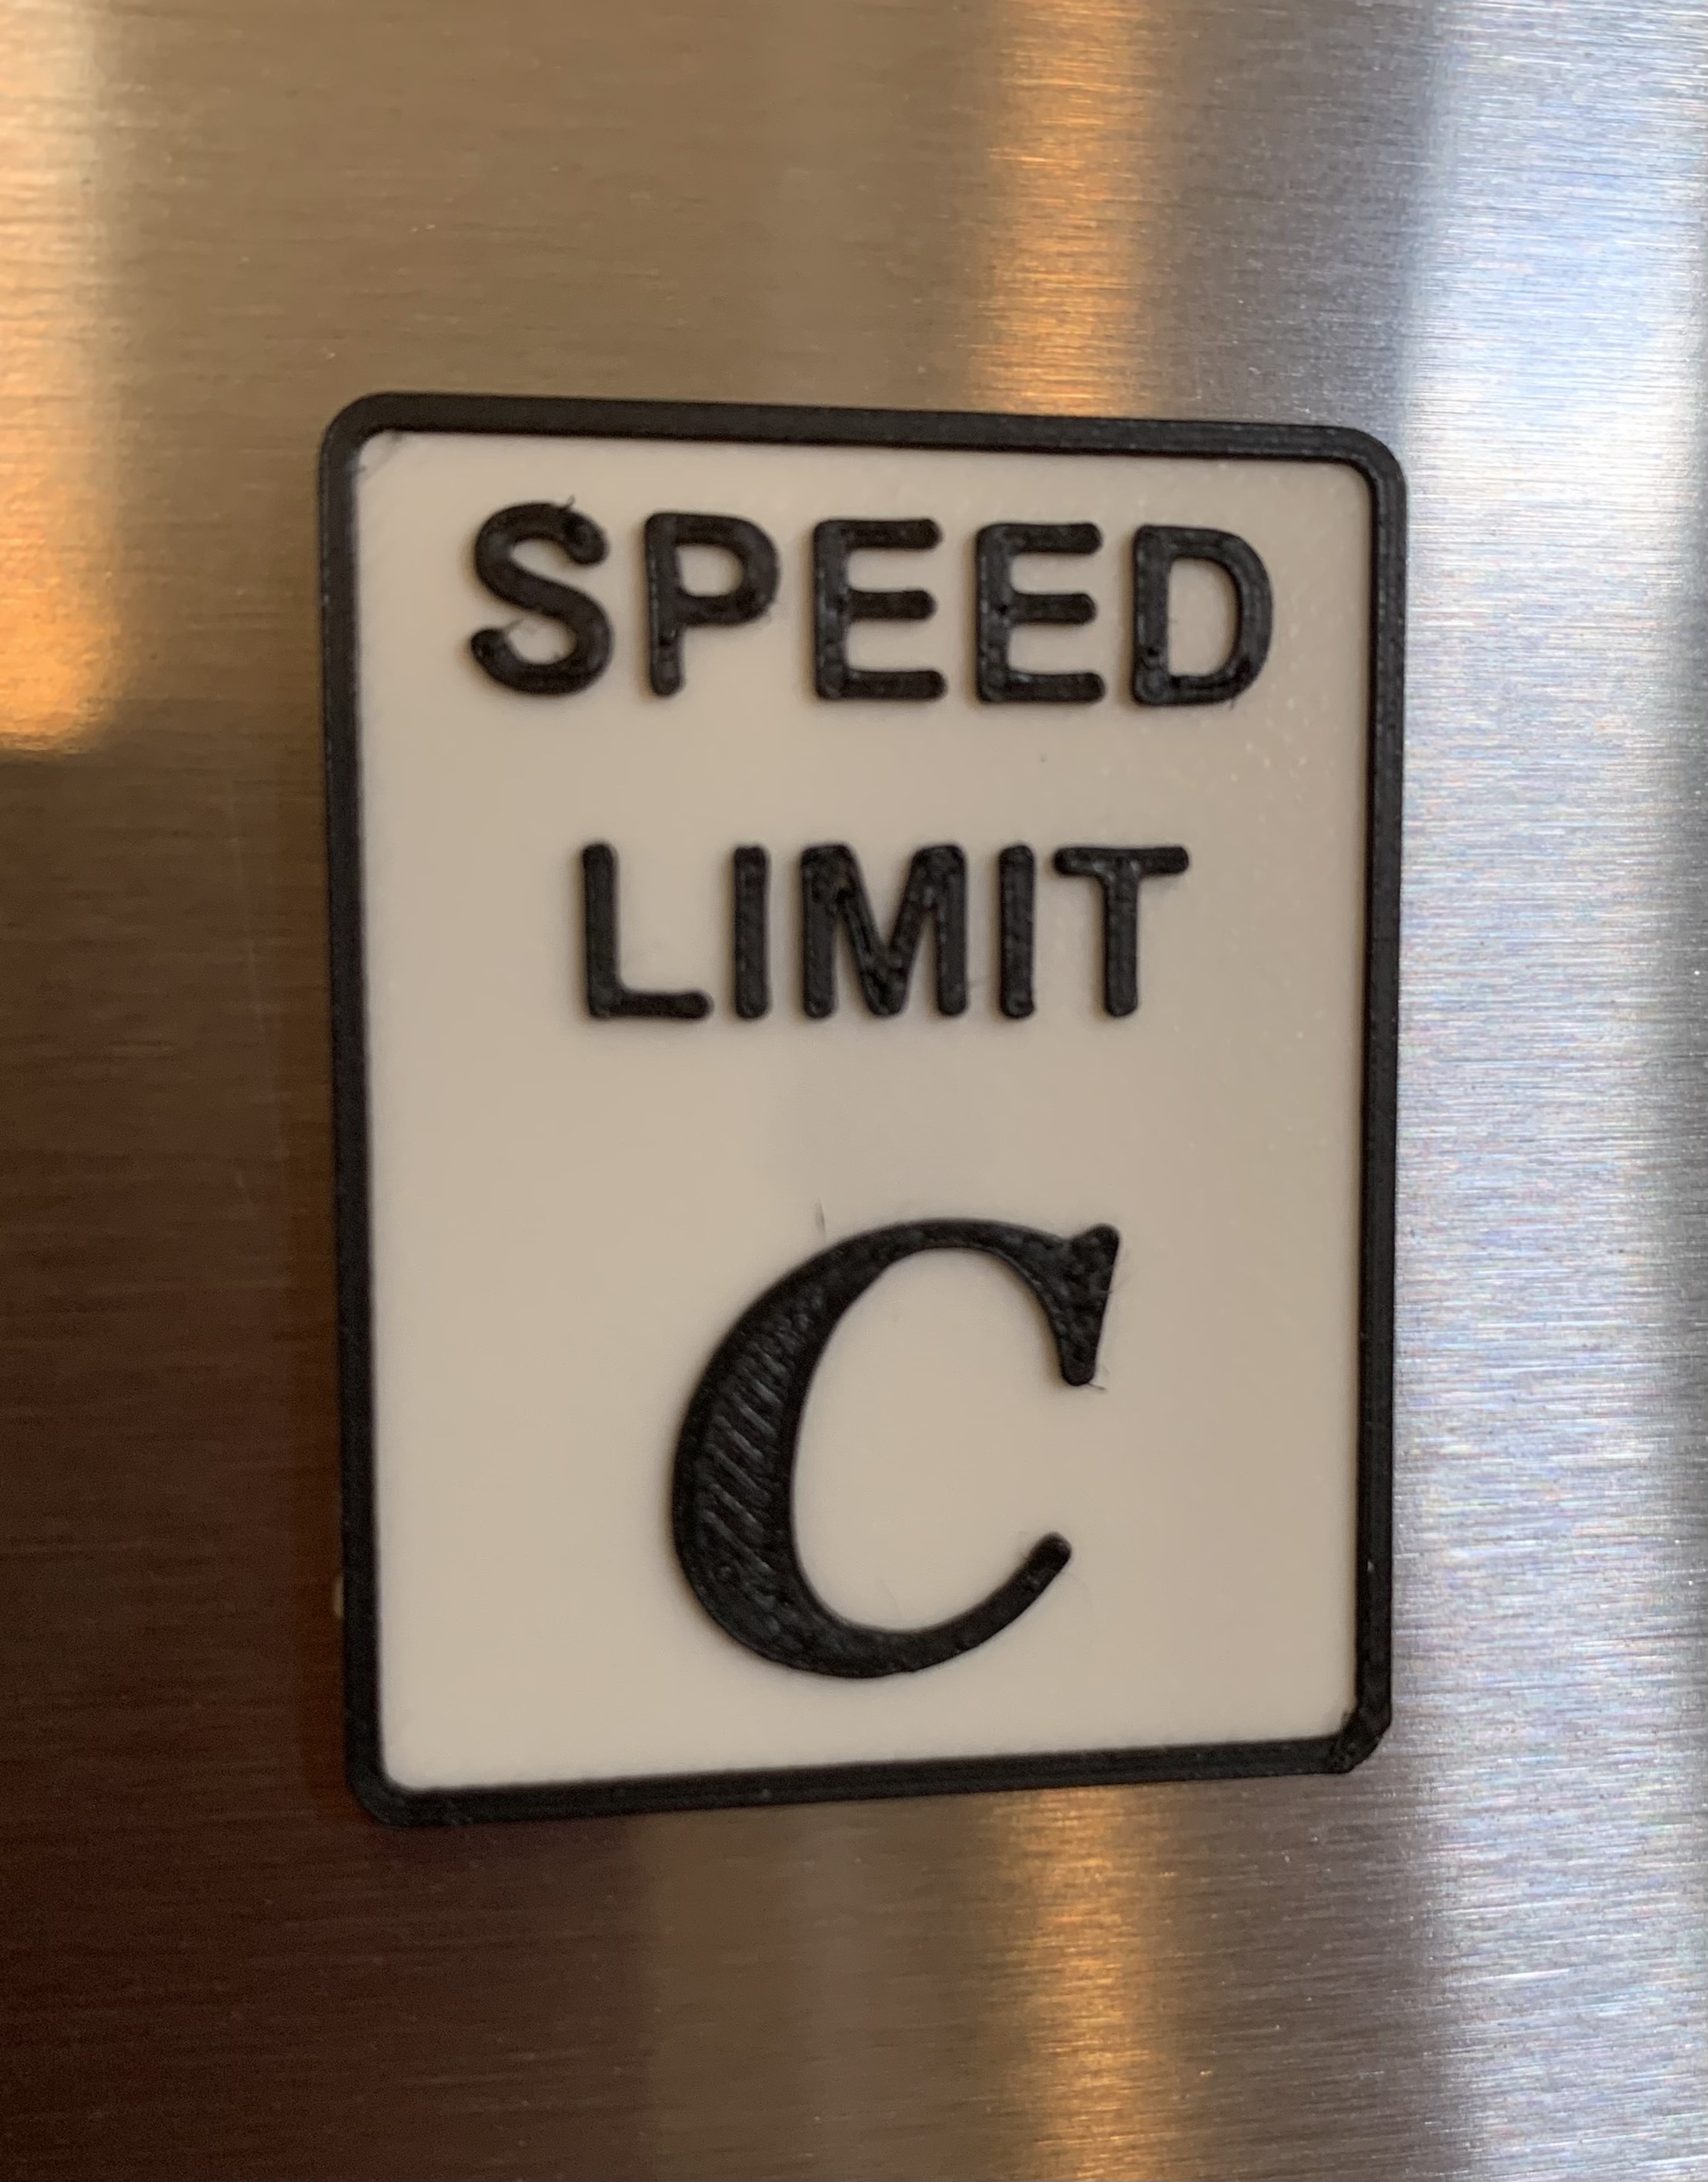 Speed Limit c (speed of light)